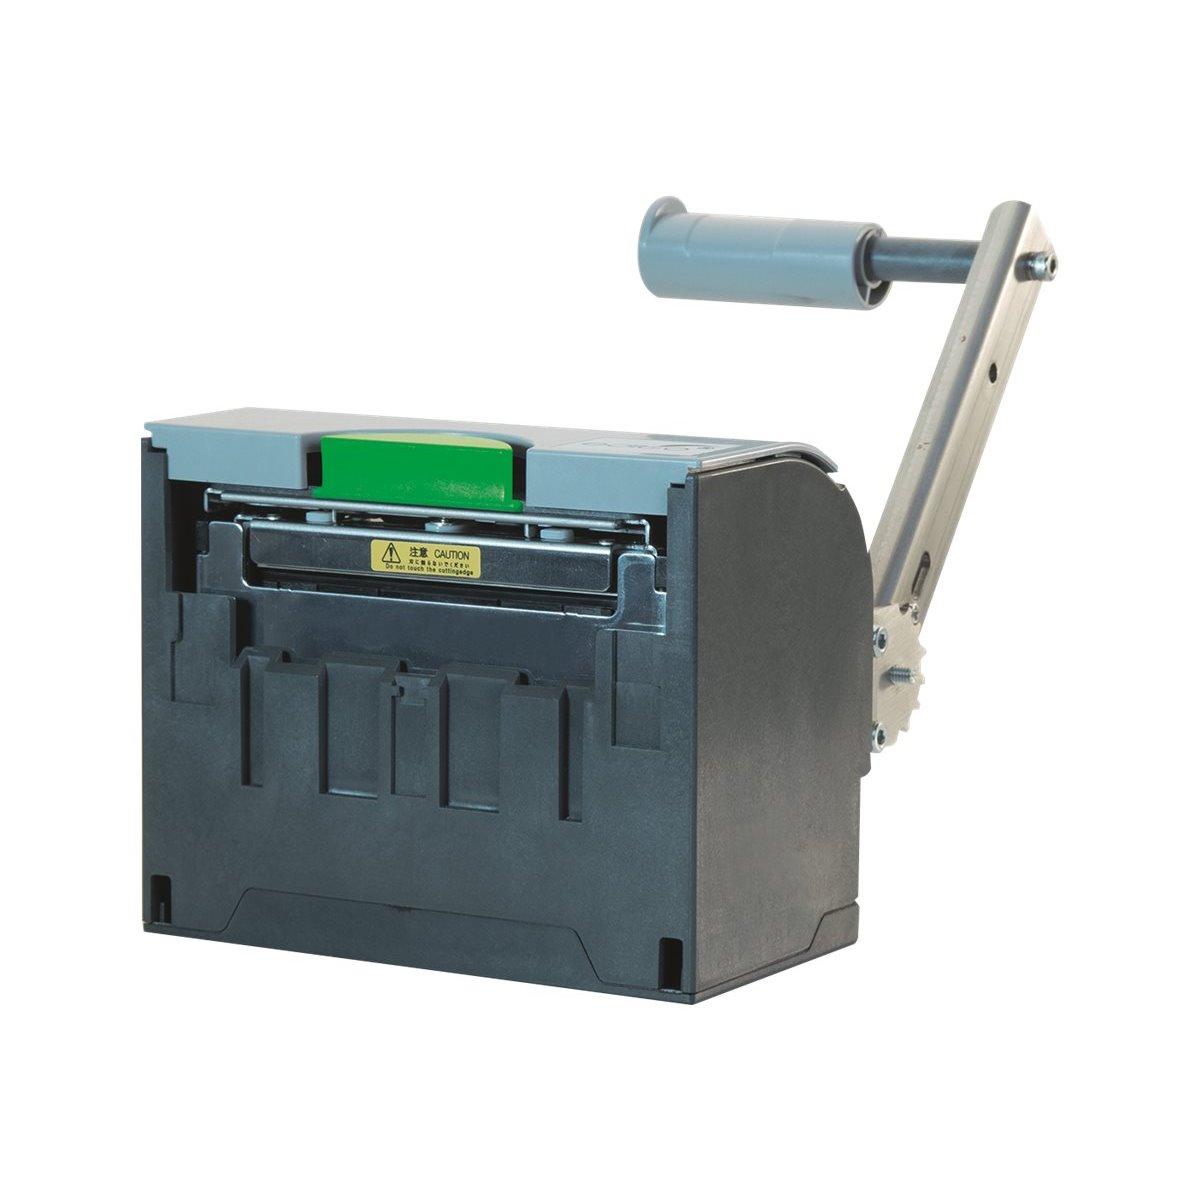 Seiko Instruments edito printer KSM347R-S-Ubase model incl. presenter with retract function serial - POS printer